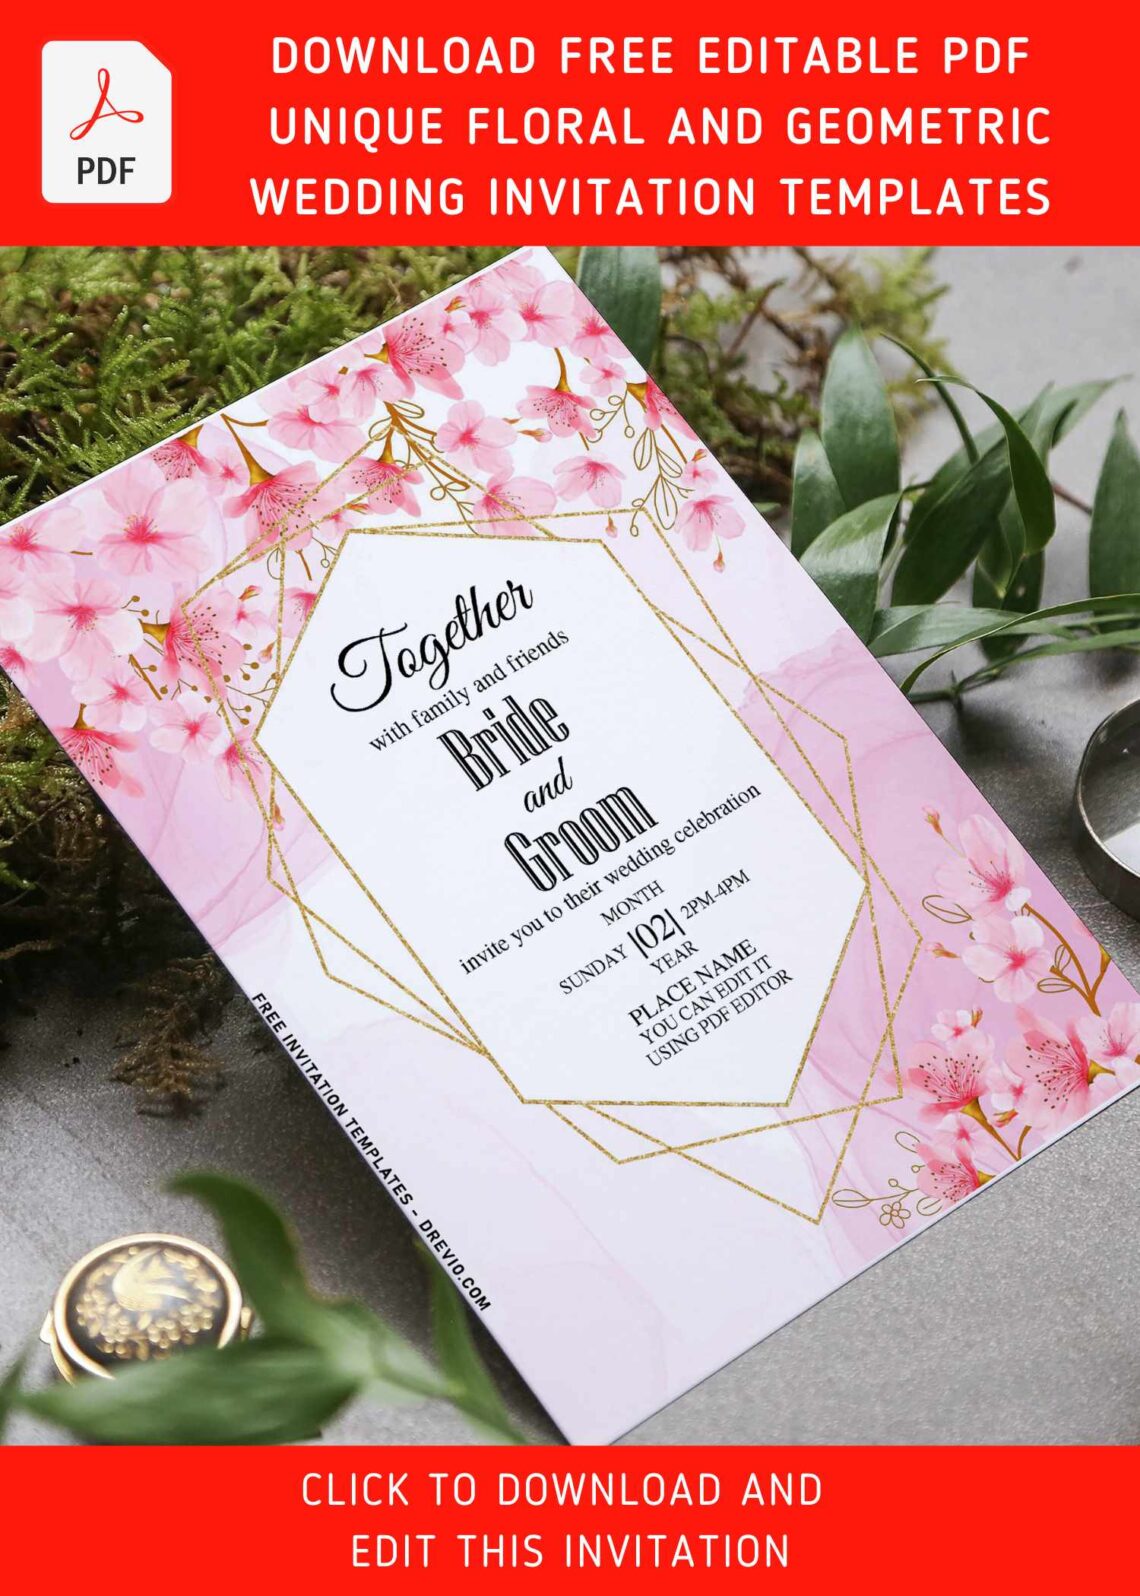 (Free Editable PDF) Unique Floral And Geometric Wedding Invitation Templates with enchanting pink Sakura